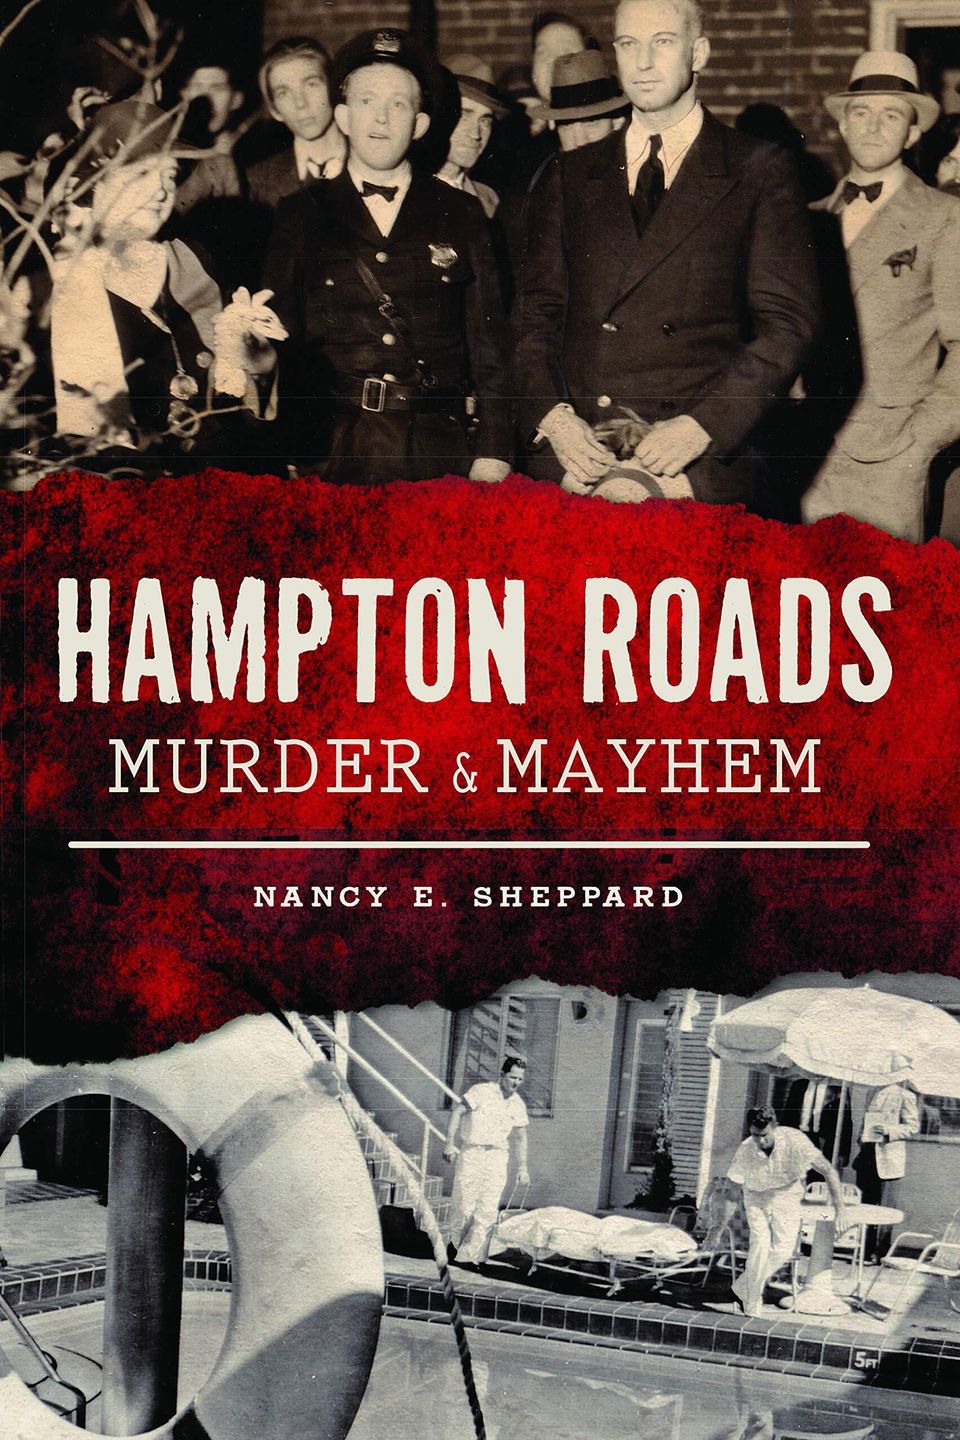 Hampton roads murder   mayhem